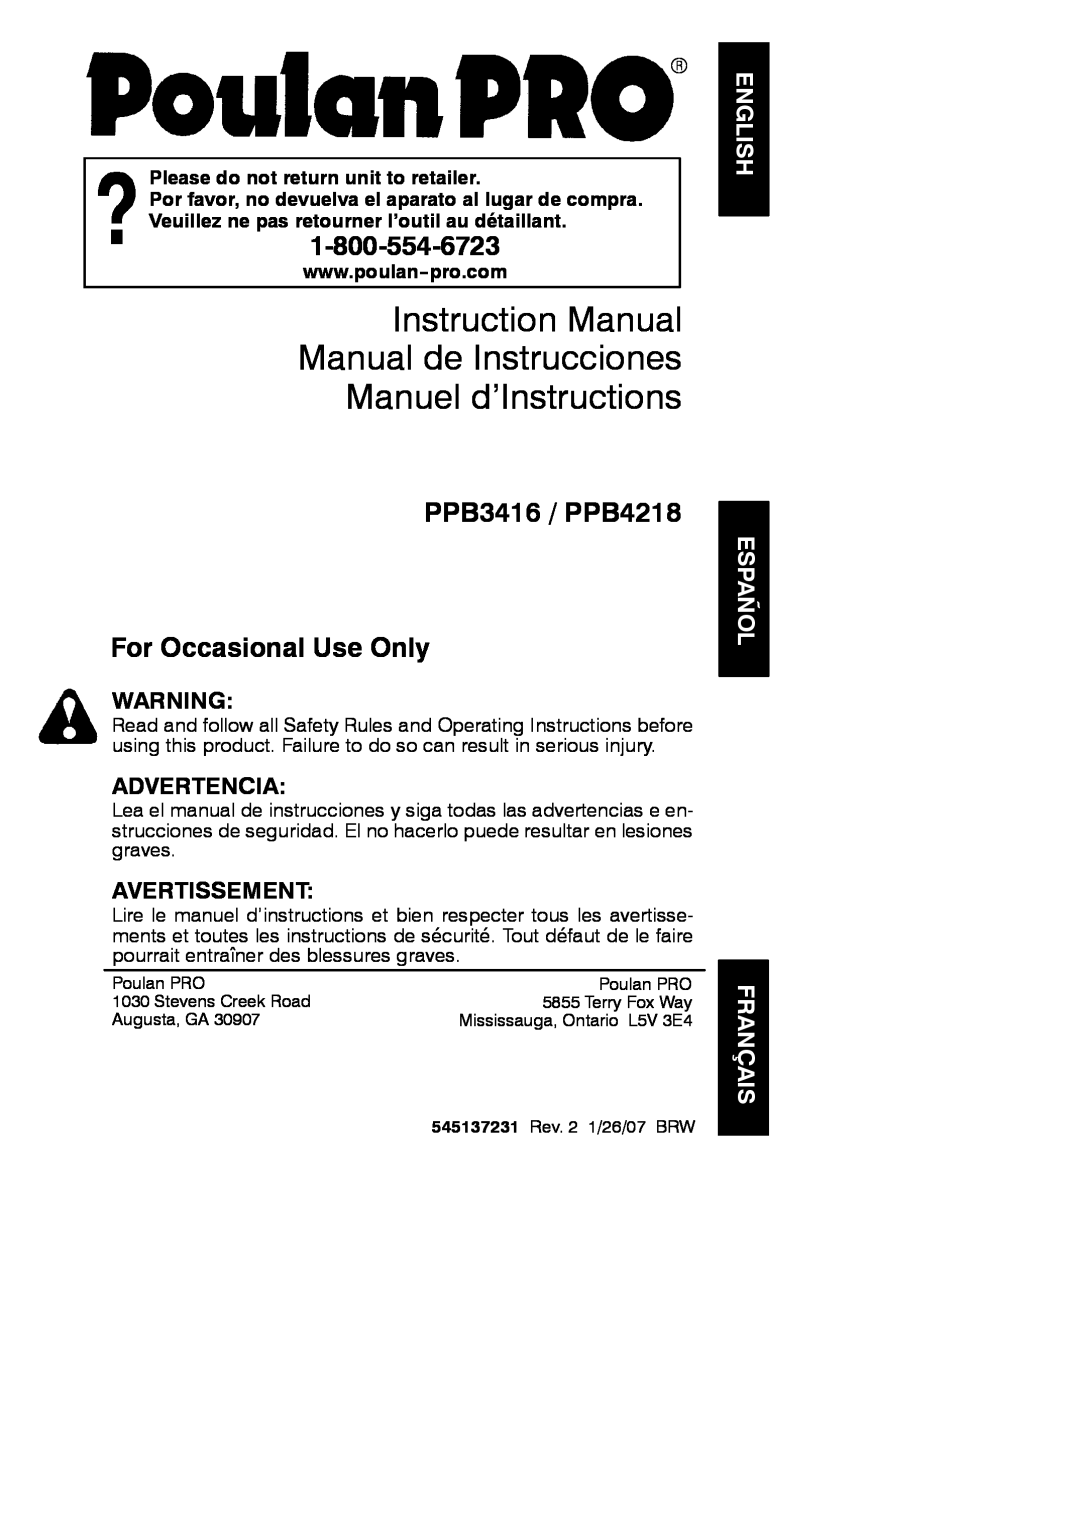 Poulan 545137231 instruction manual English, Español Français, PPB3416 / PPB4218 For Occasional Use Only, Advertencia 